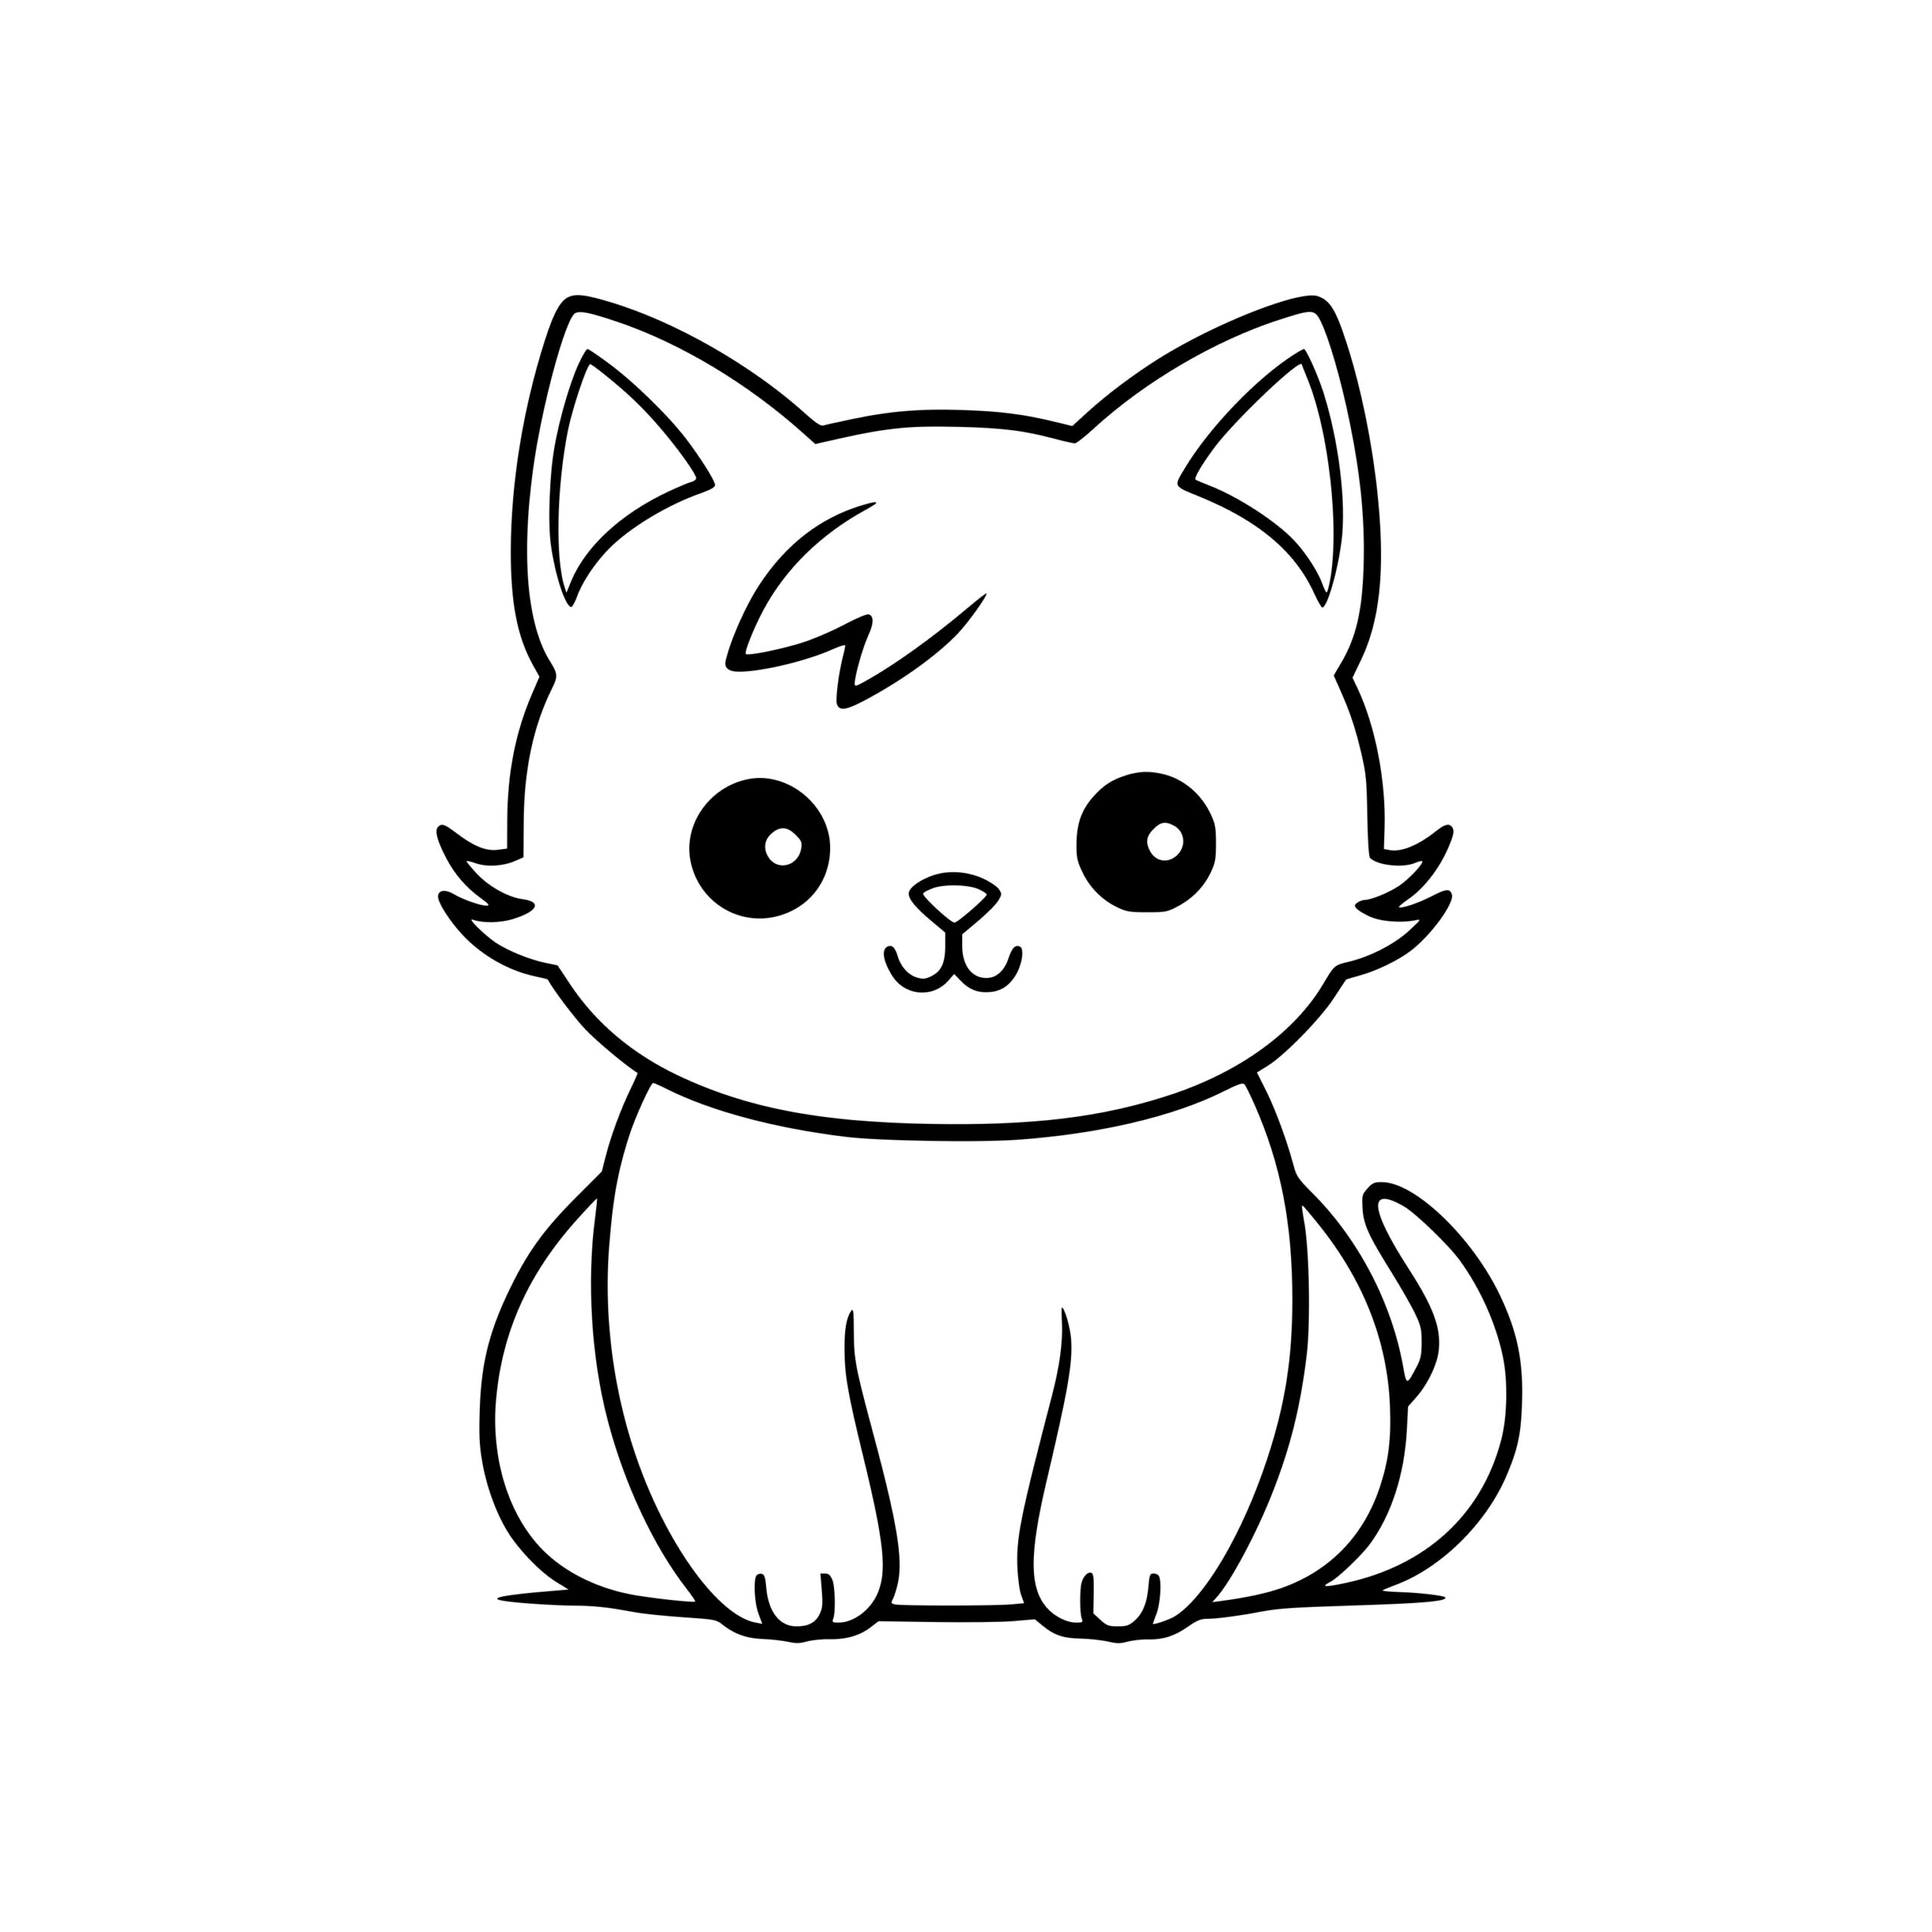 Cute Cartoon Cat SVG File for Cricut, Silhouette, and Laser Machines